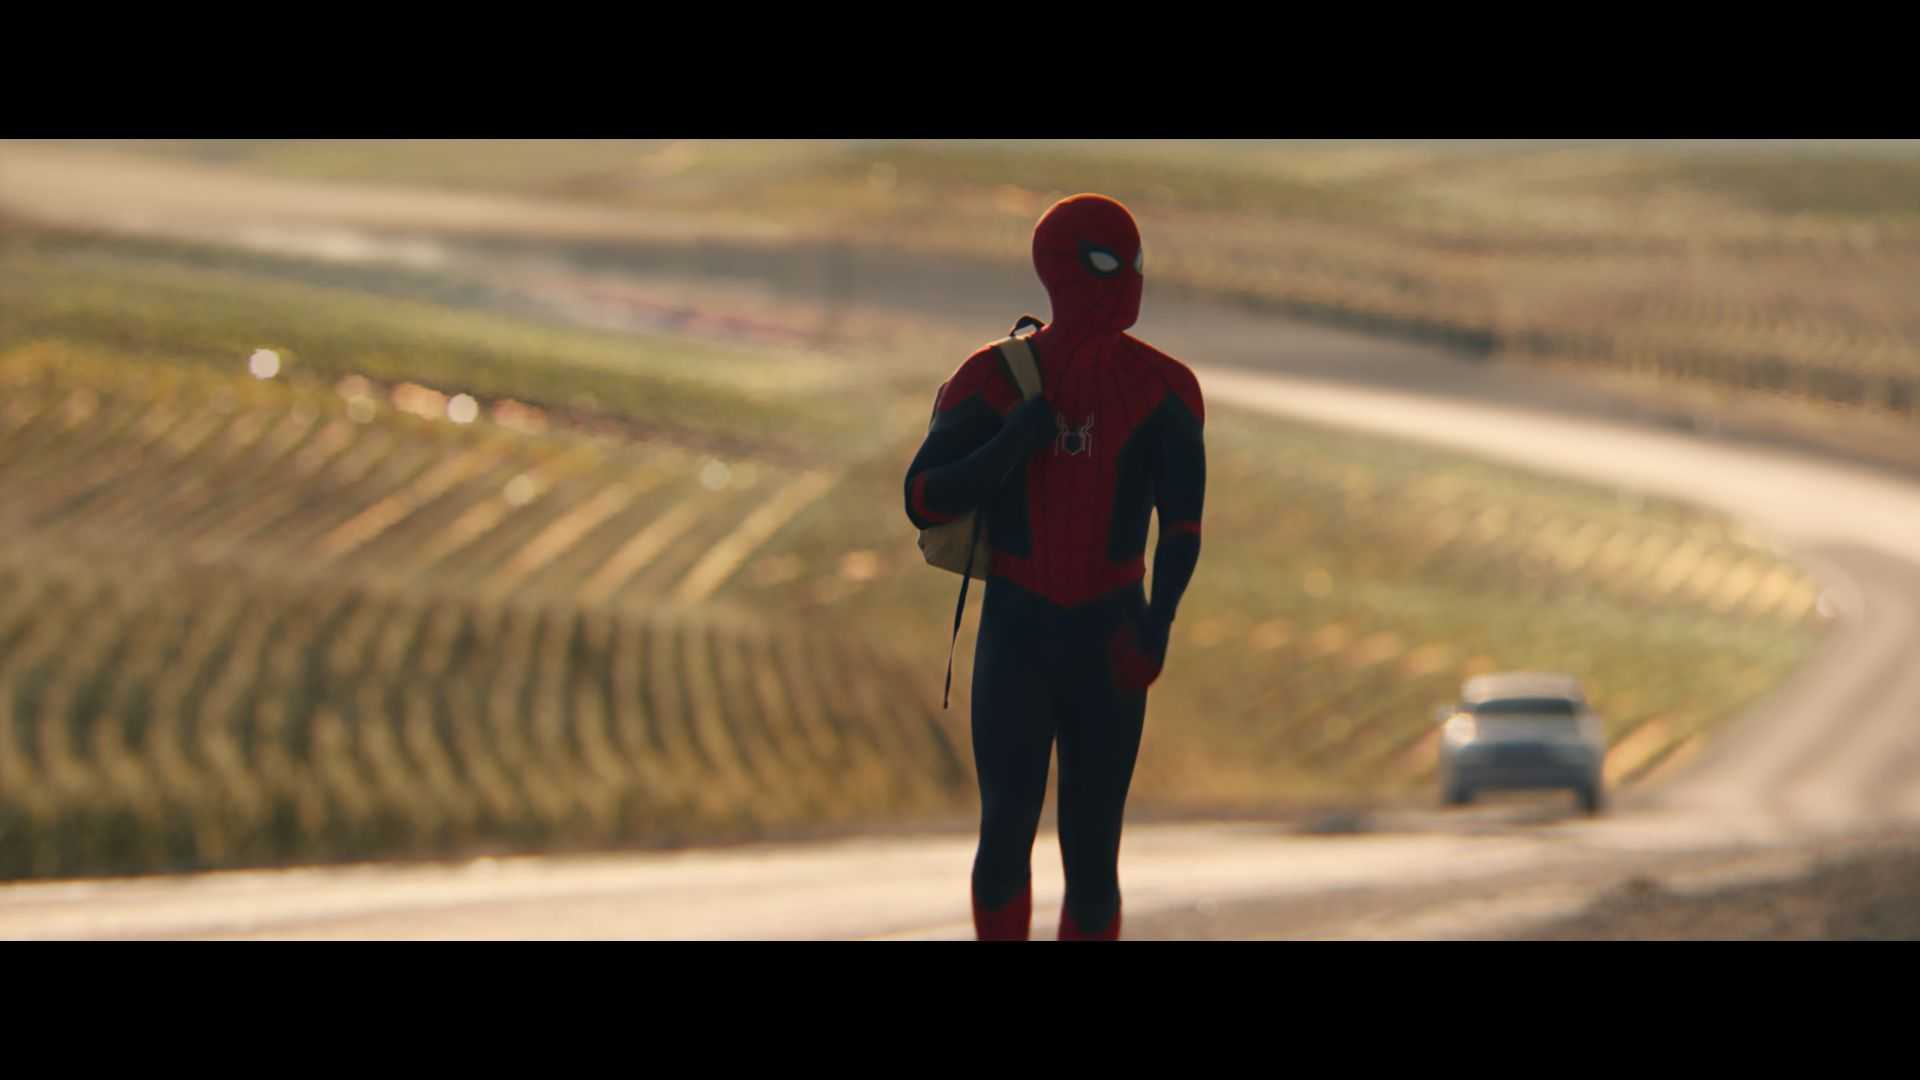 Spiderman No Way Home Walking Away Wallpapers